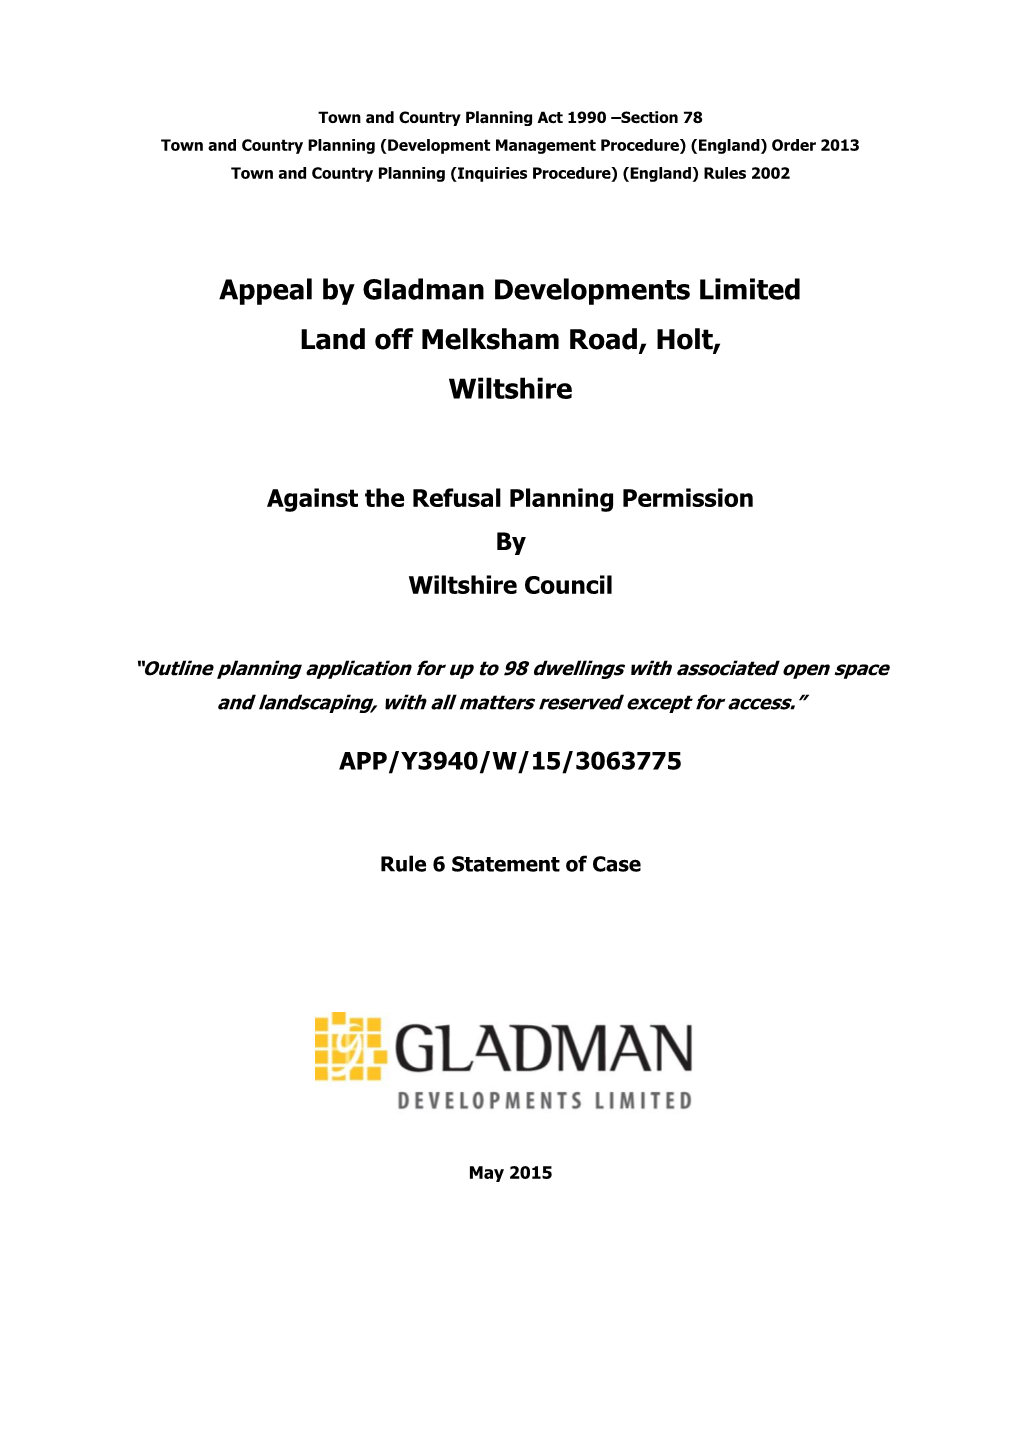 Appeal by Gladman Developments Limited Land Off Melksham Road, Holt, Wiltshire